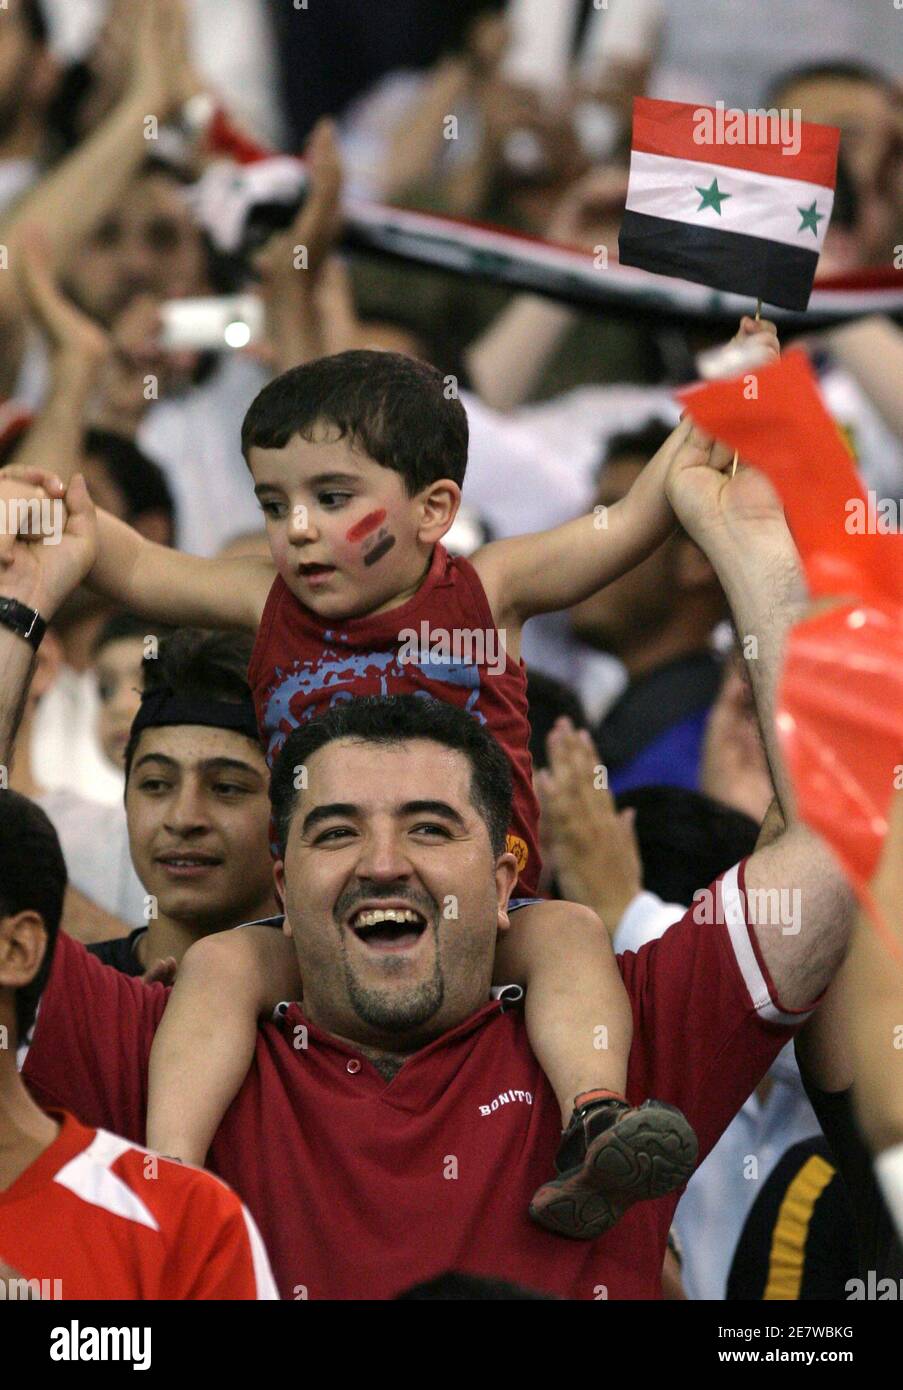 Syrian fans cheer for their team during a friendly soccer match with Saudi Arabia in Riyadh May 24, 2008.      REUTERS/Fahad Shadeed   (SAUDI ARABIA) Stock Photo